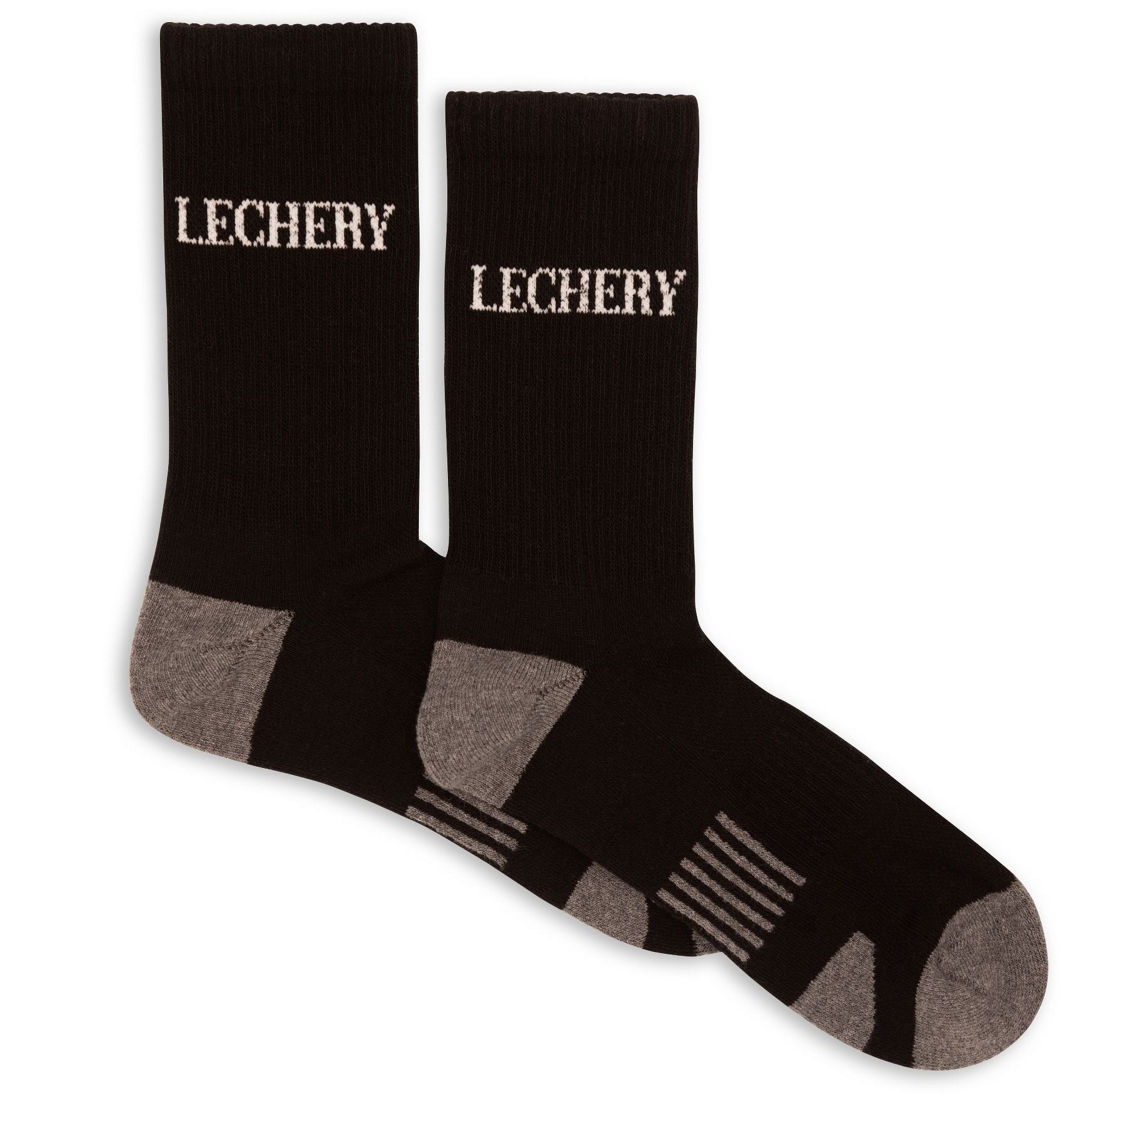 LECHERY Unisex Sports Crew Socks - Image 2 of 4